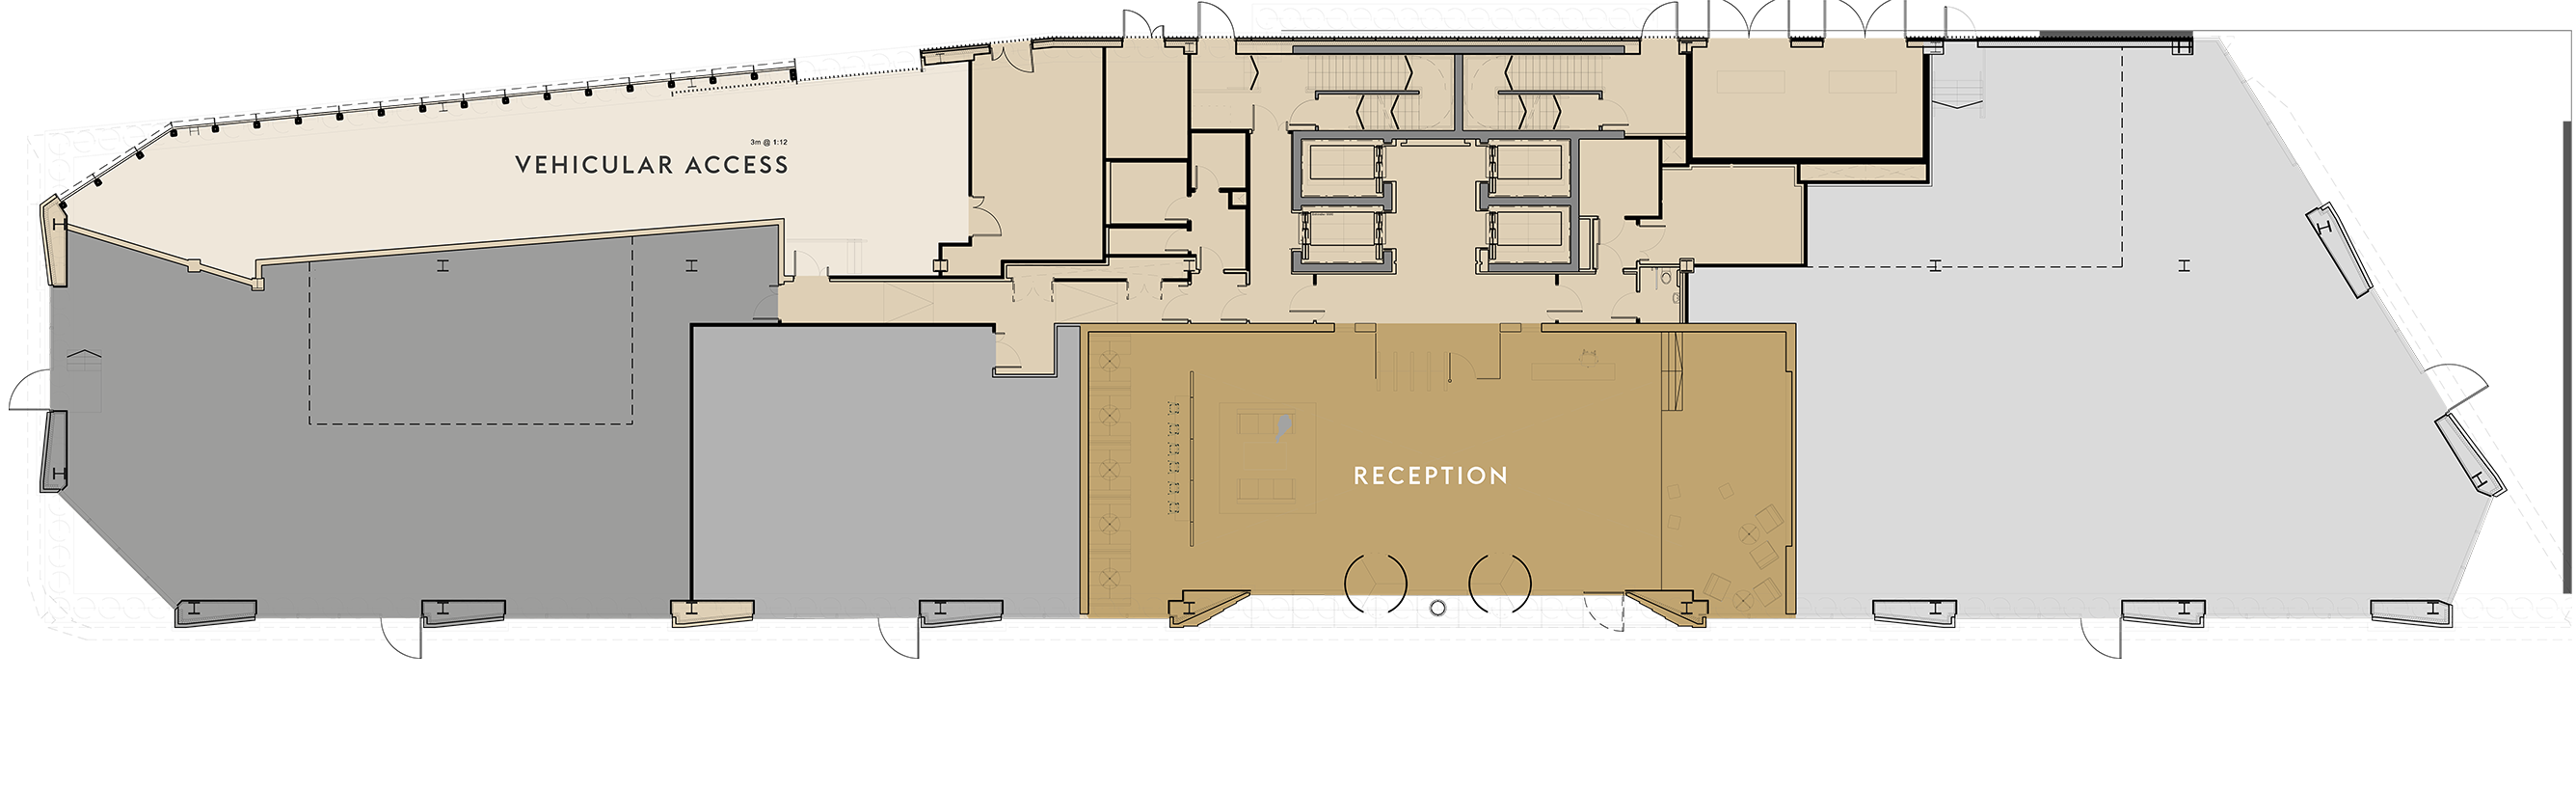 Reception floor plan